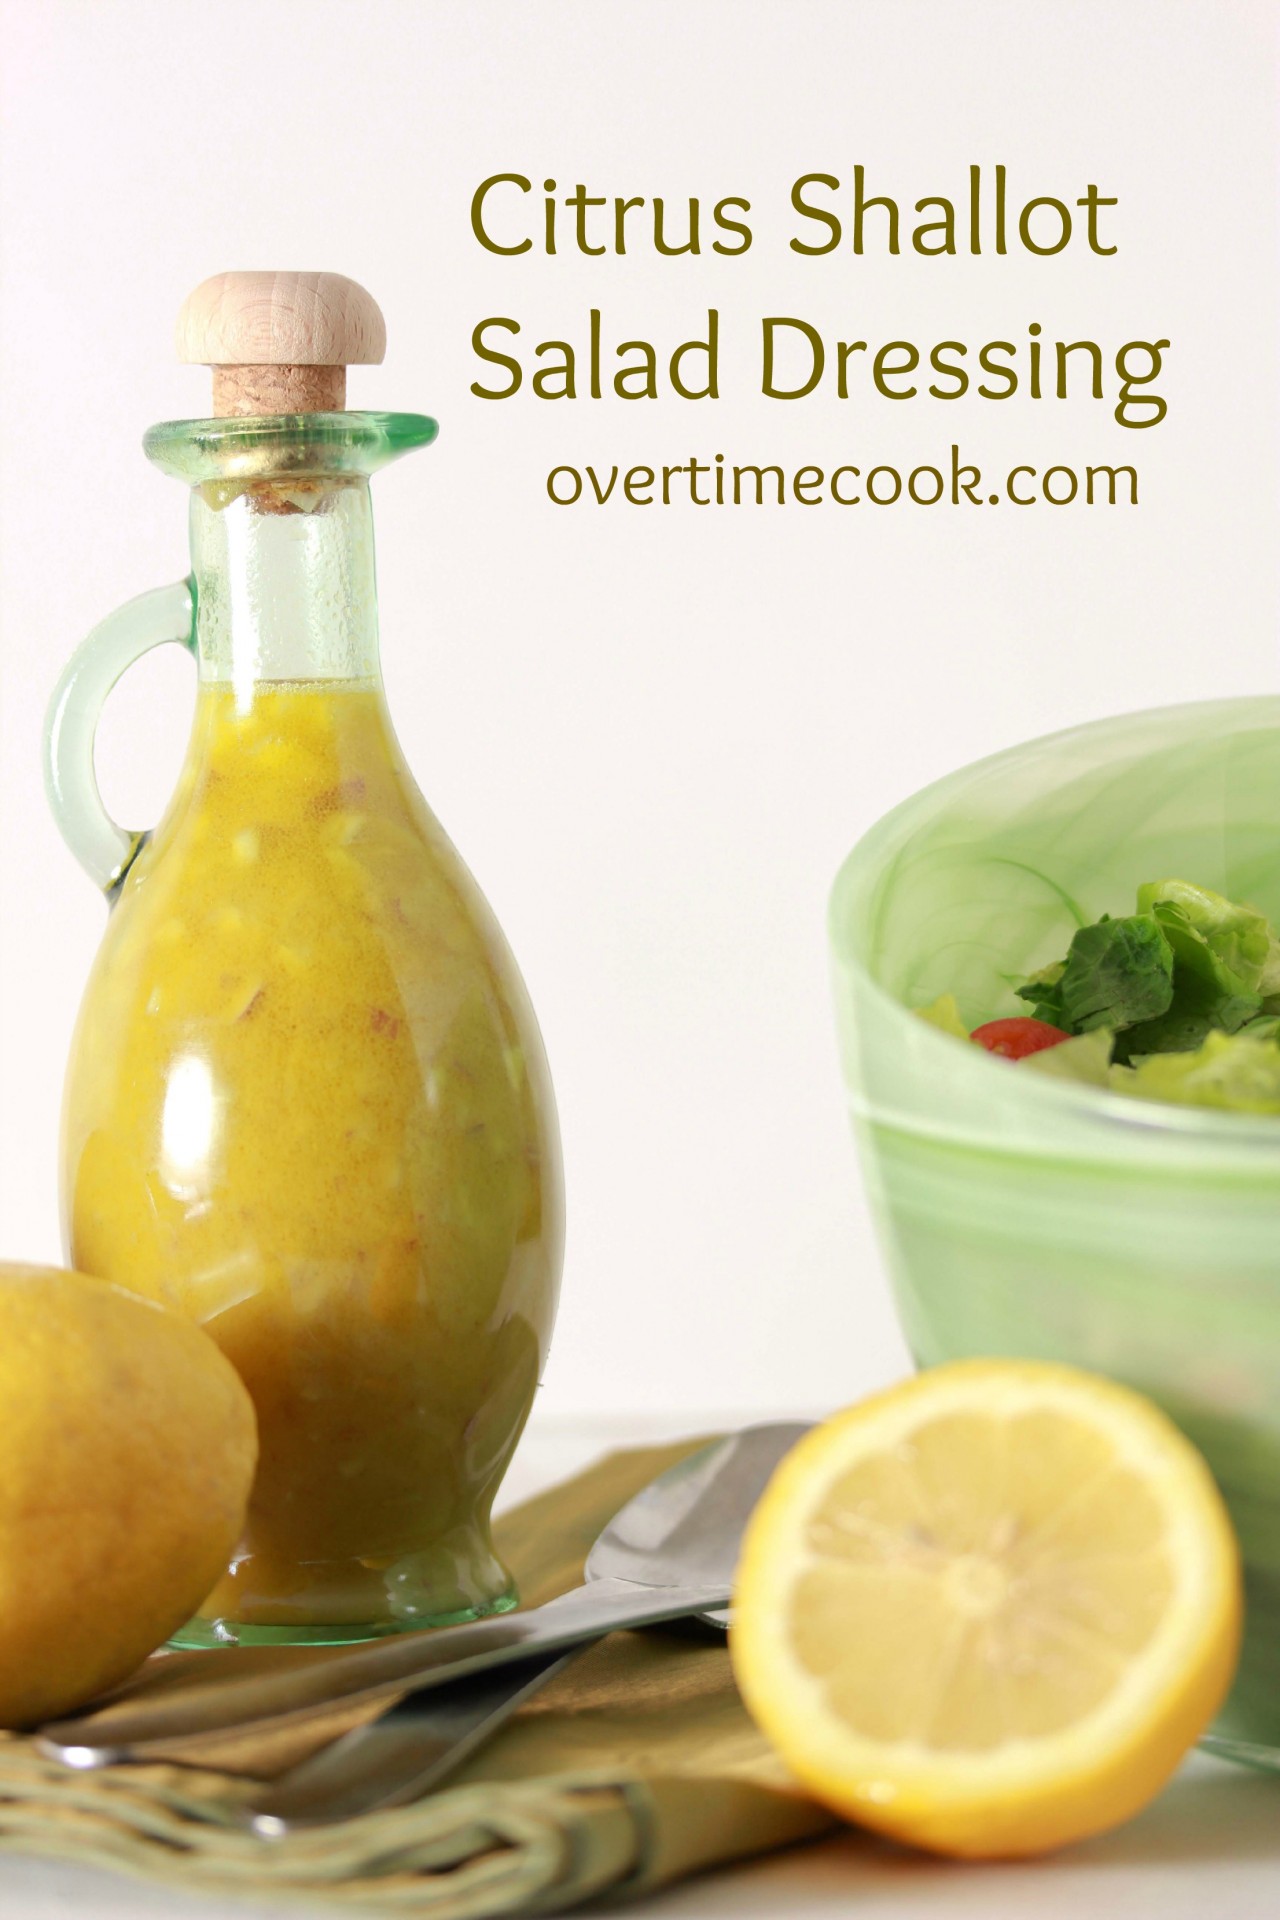 Citrus Shallot Salad Dressing on OvertimeCook